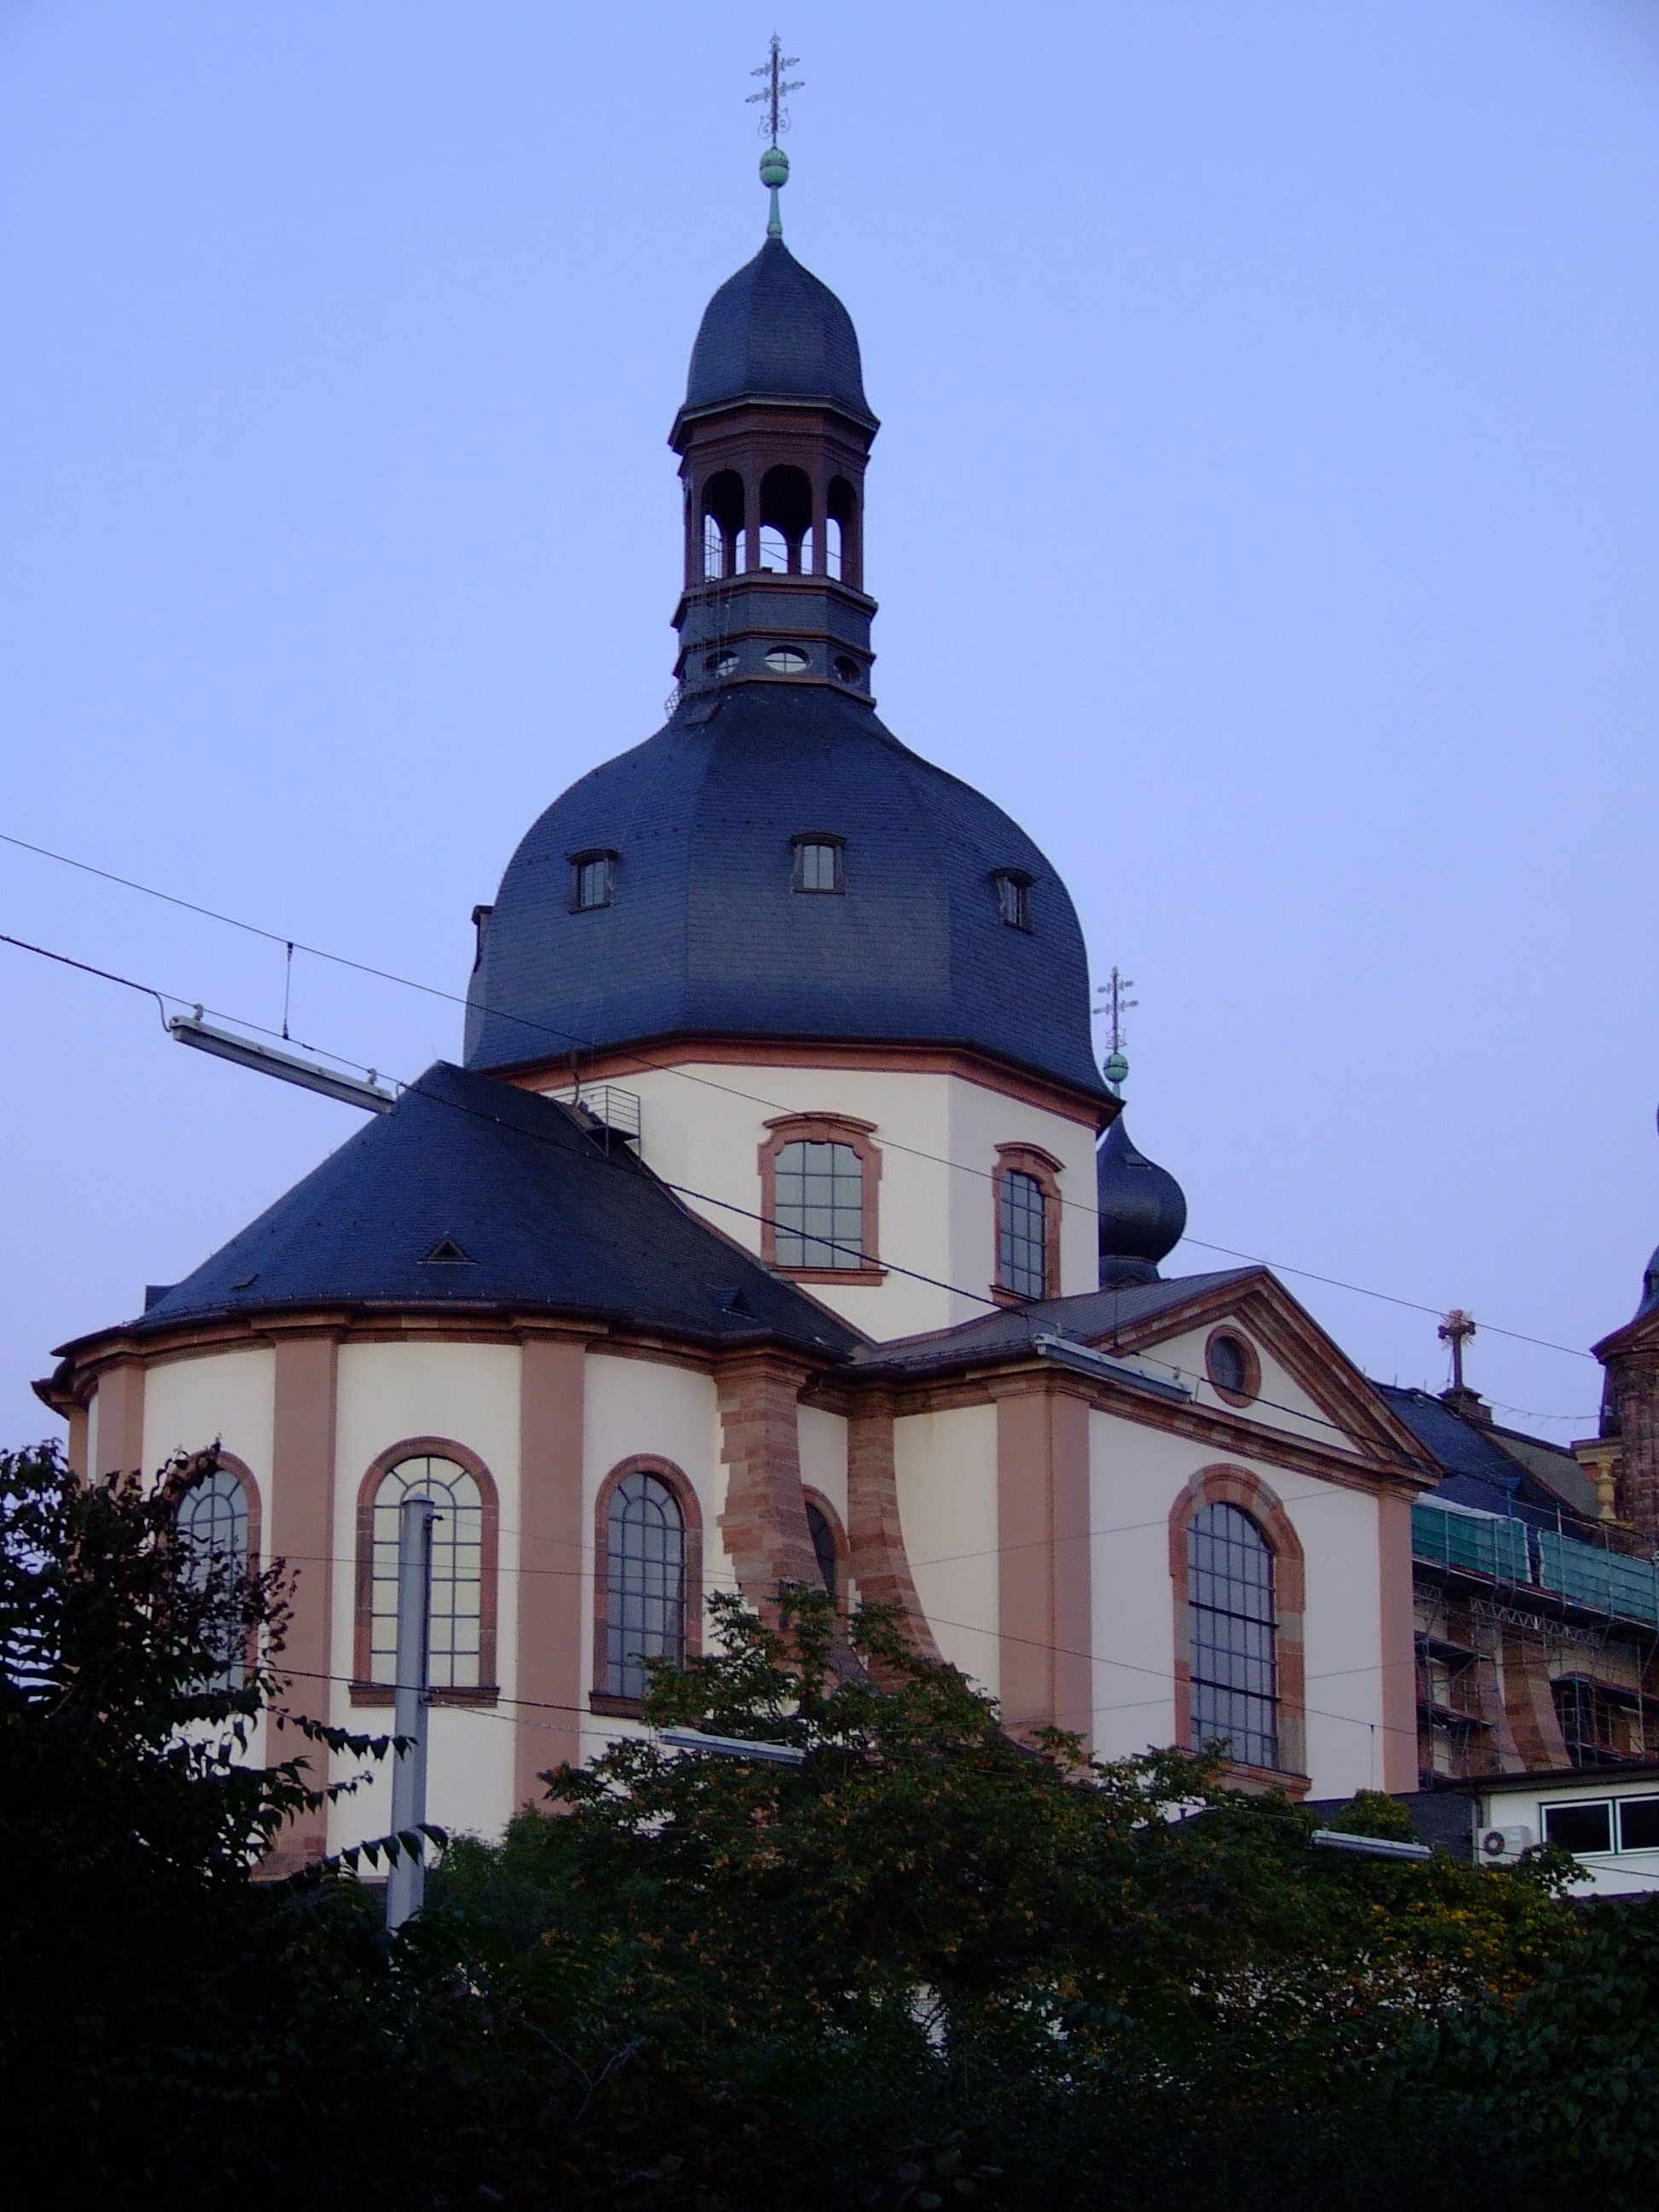 Datei:Mannheim Jesuitenkirche 3.jpg